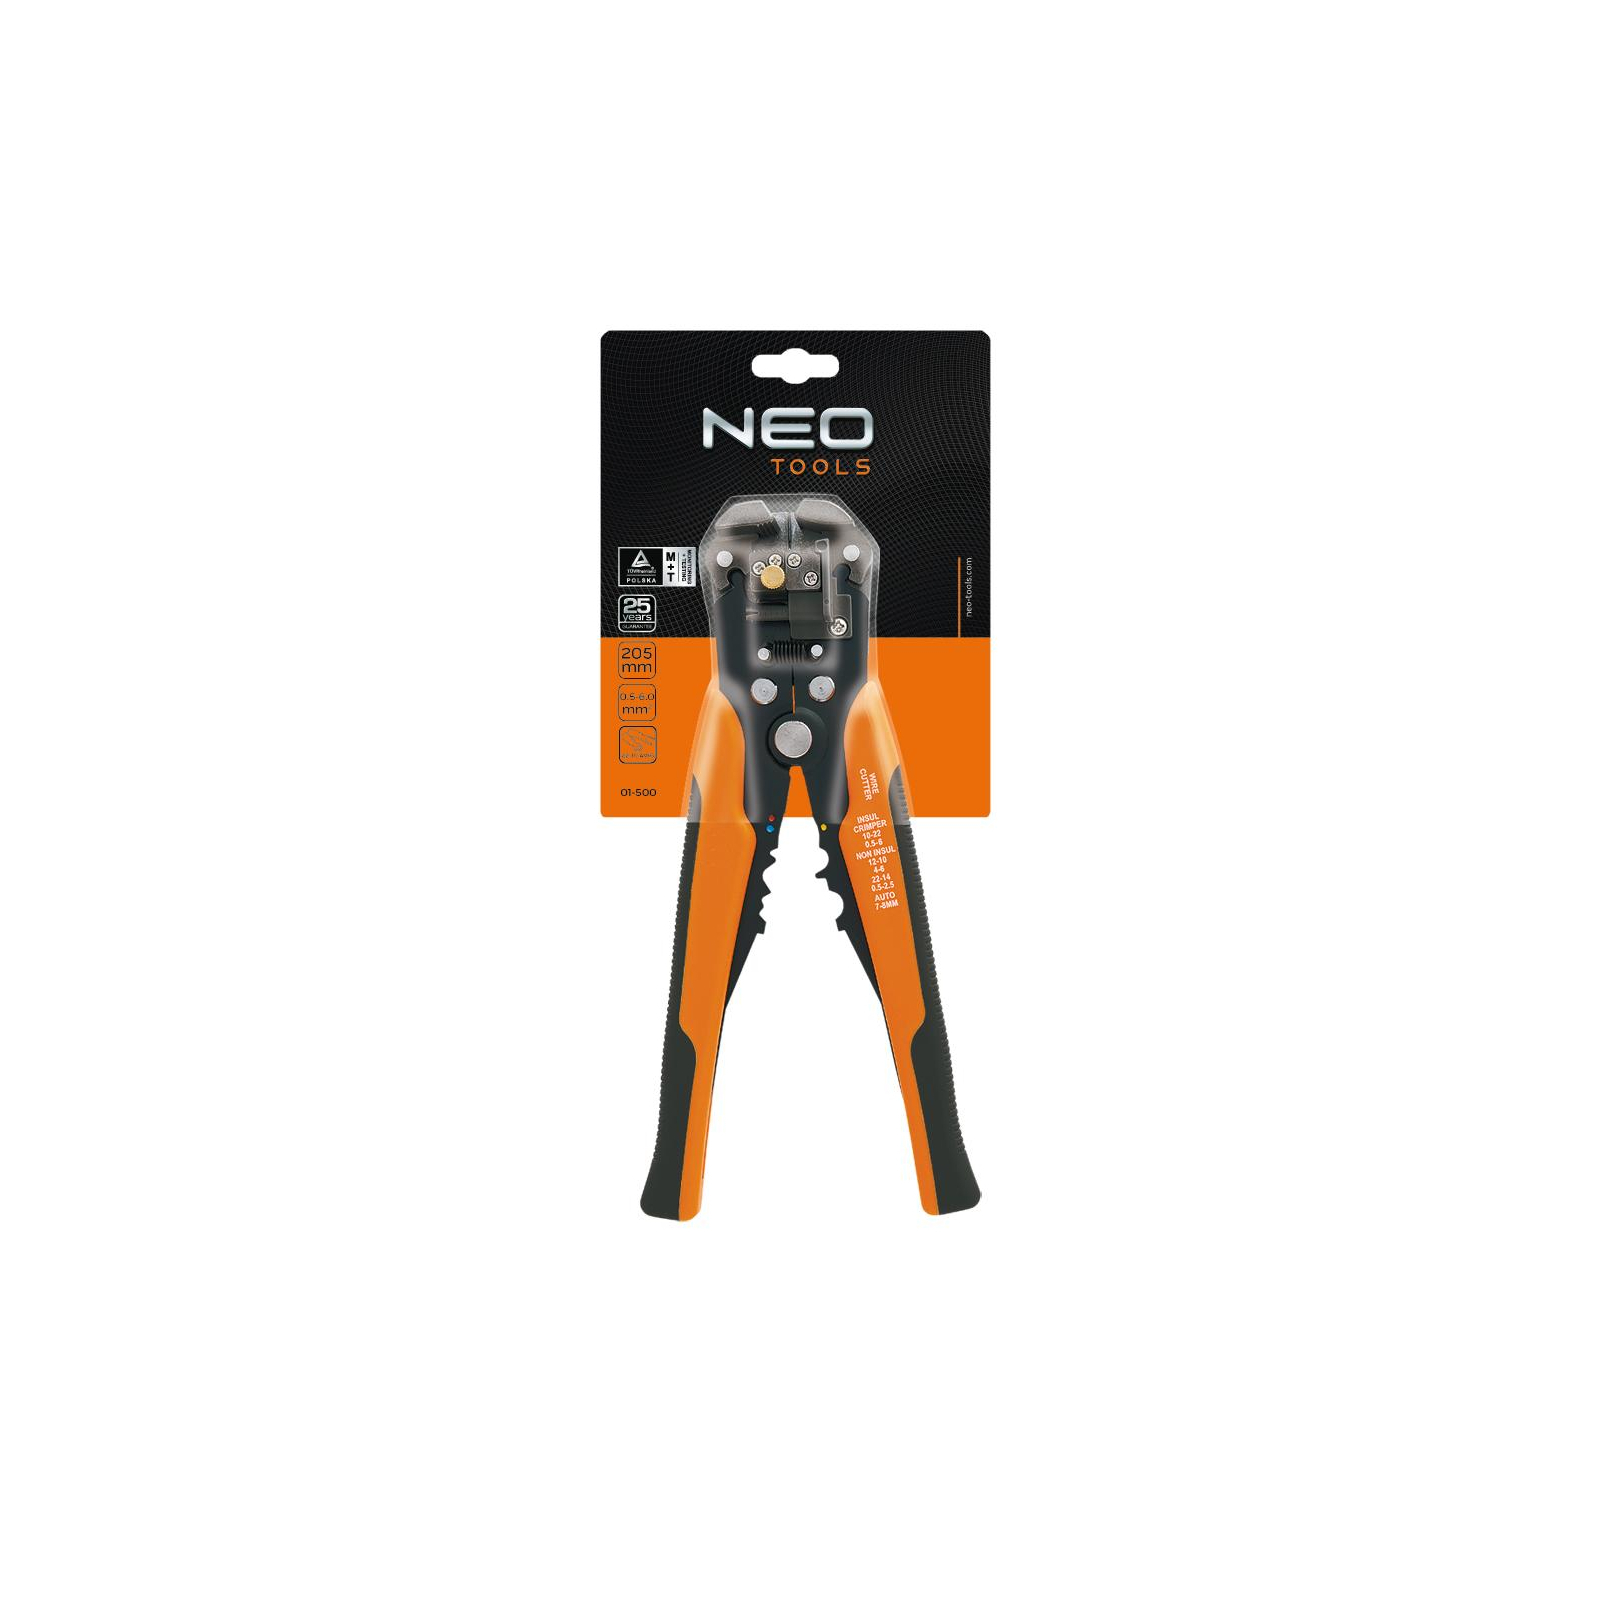 Съемник изоляции Neo Tools автоматический 205 мм, торцевой (01-500) изображение 2